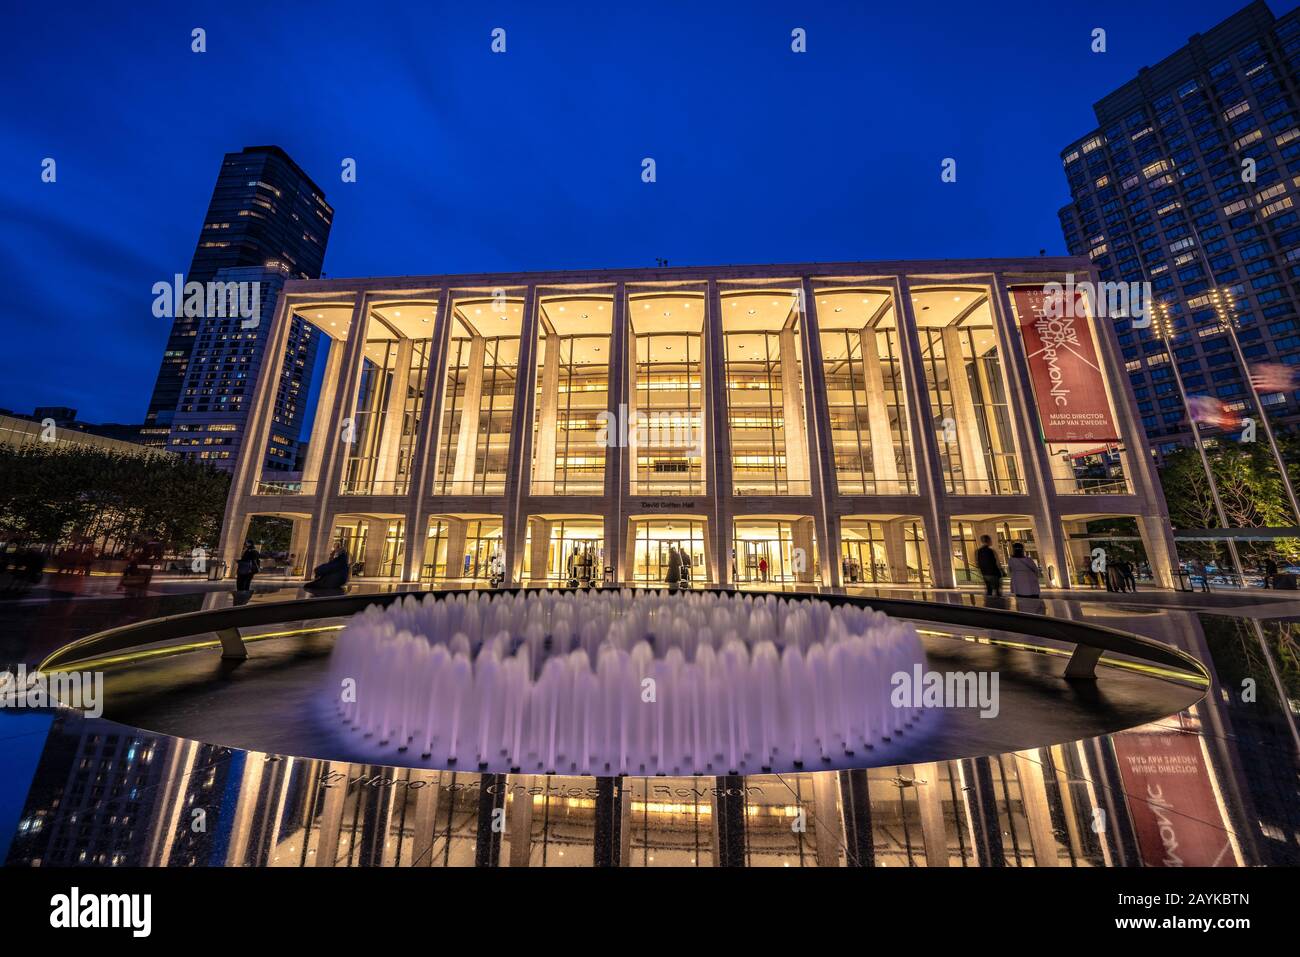 New YORK, USA - 09. OKTOBER: Blick auf das Lincoln Center for the Performing Arts, ein beliebtes Performing Arts Center in Manhattan am 09. Oktober 2019 in Stockfoto